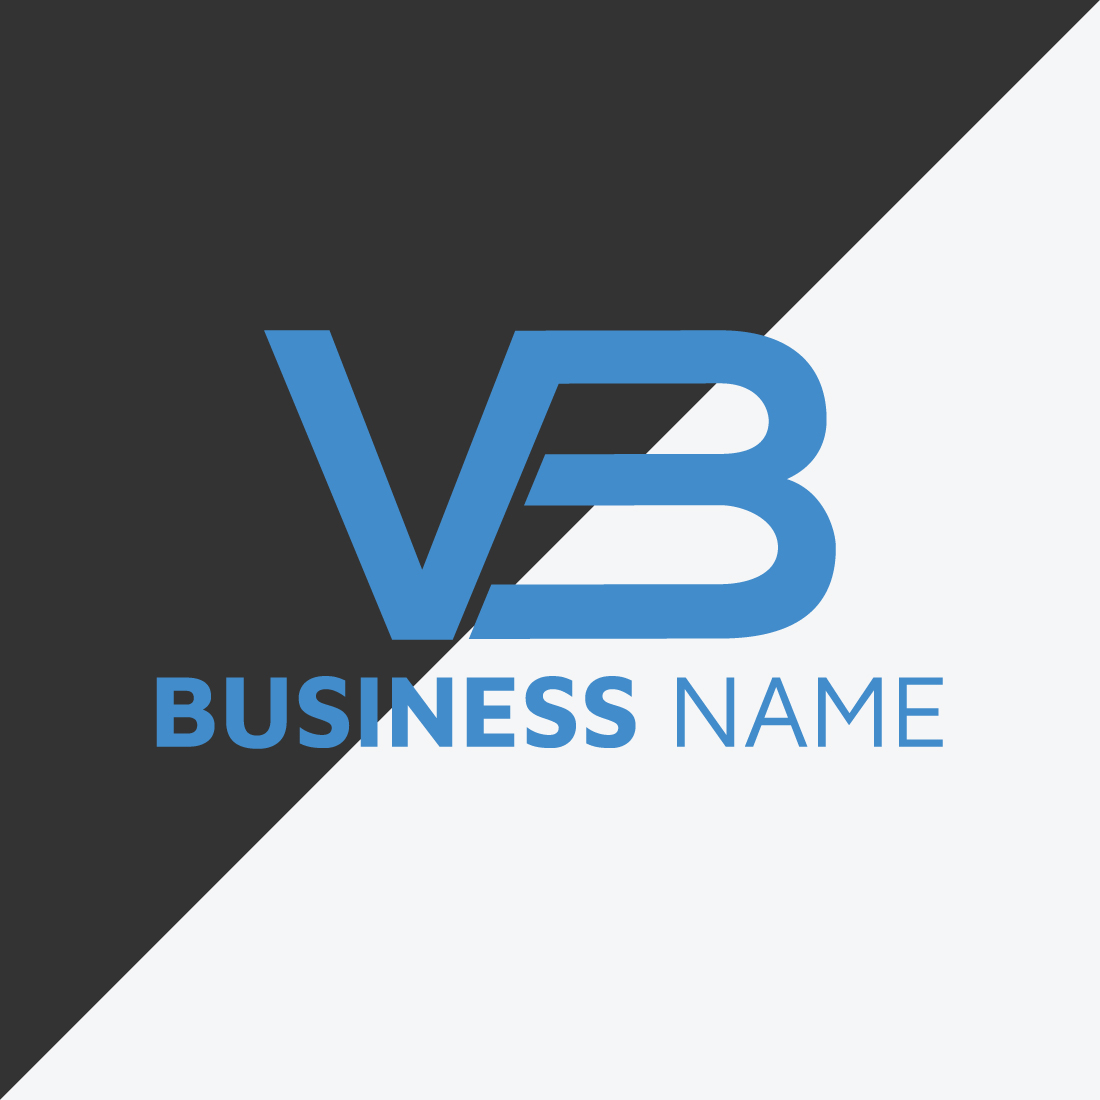 Vb letter logo design with black smoke Royalty Free Vector